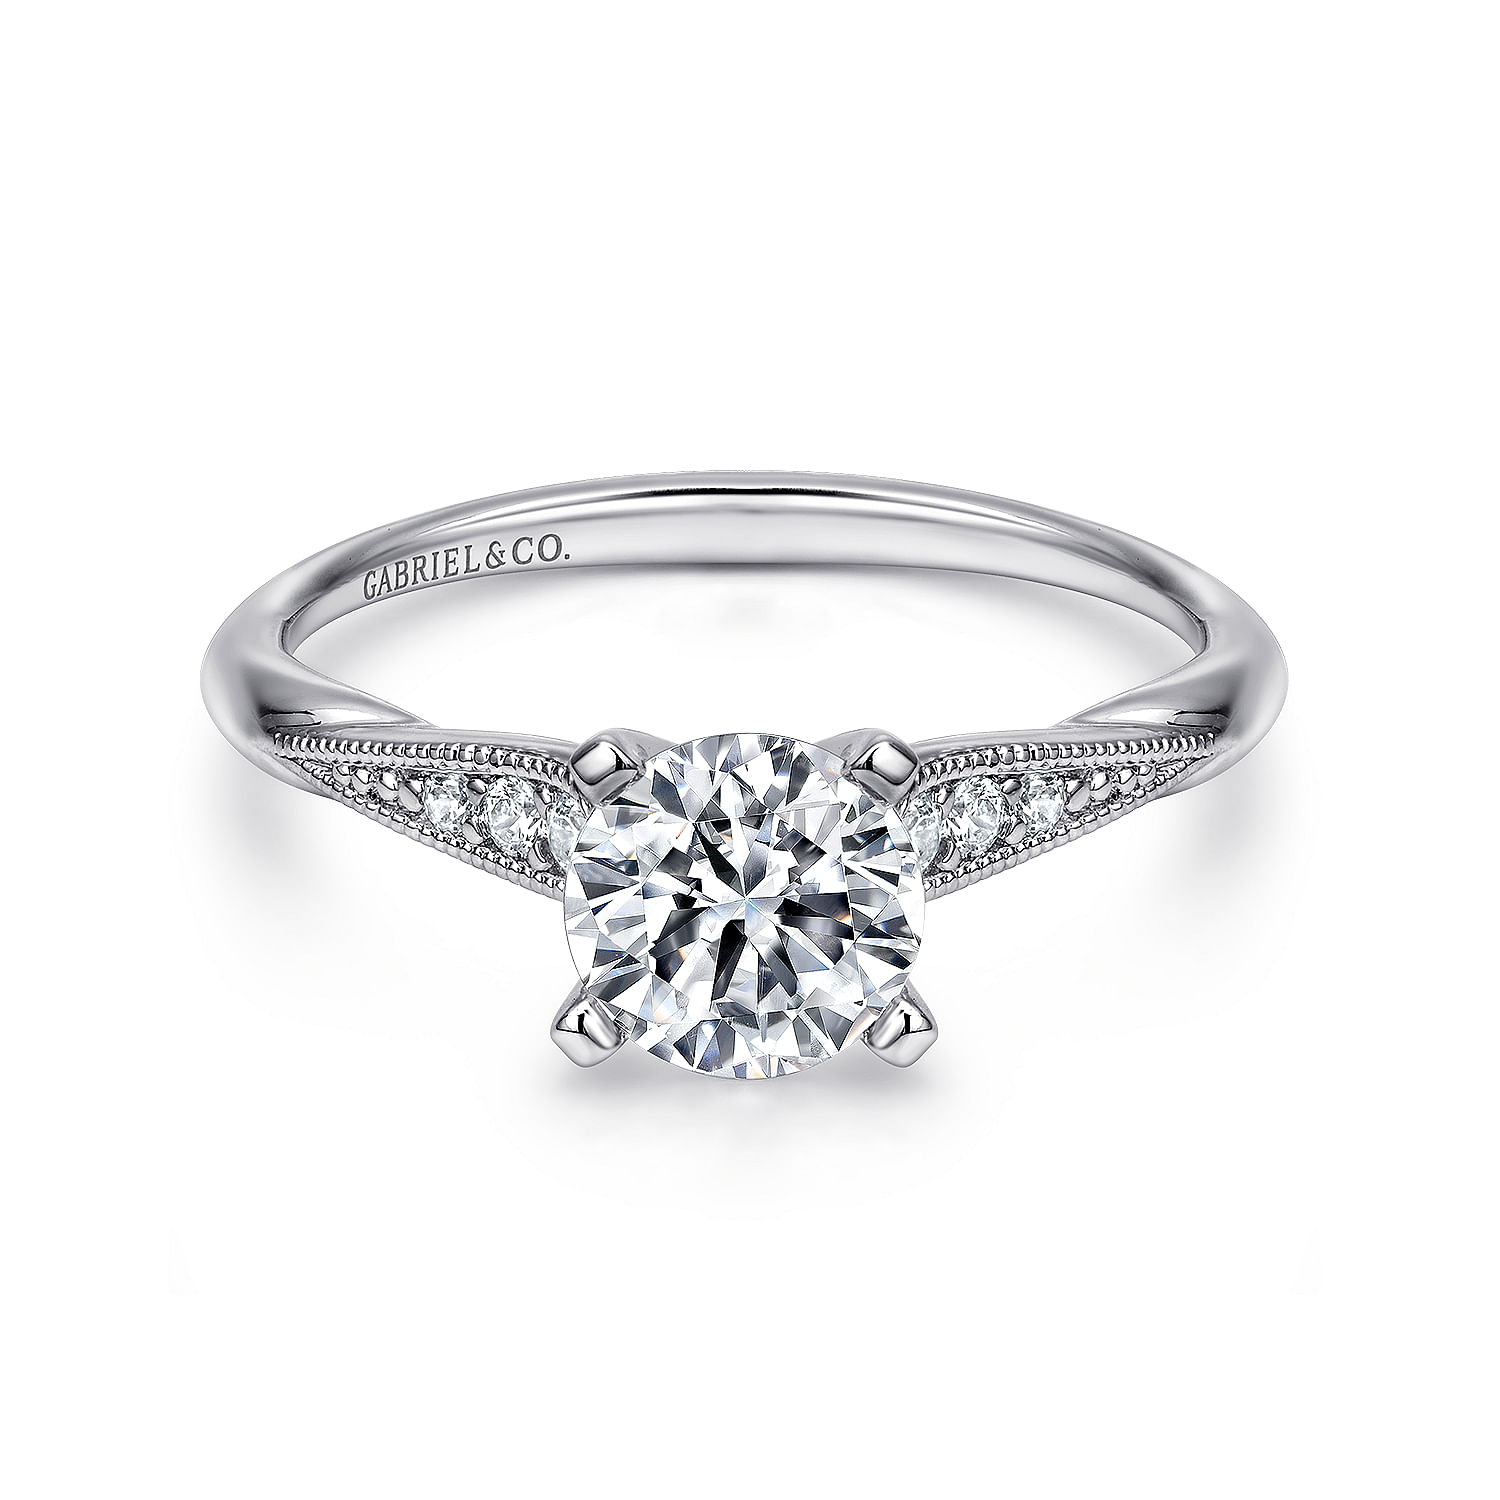 Riley---14K-White-Gold-Round-Diamond-Engagement-Ring1